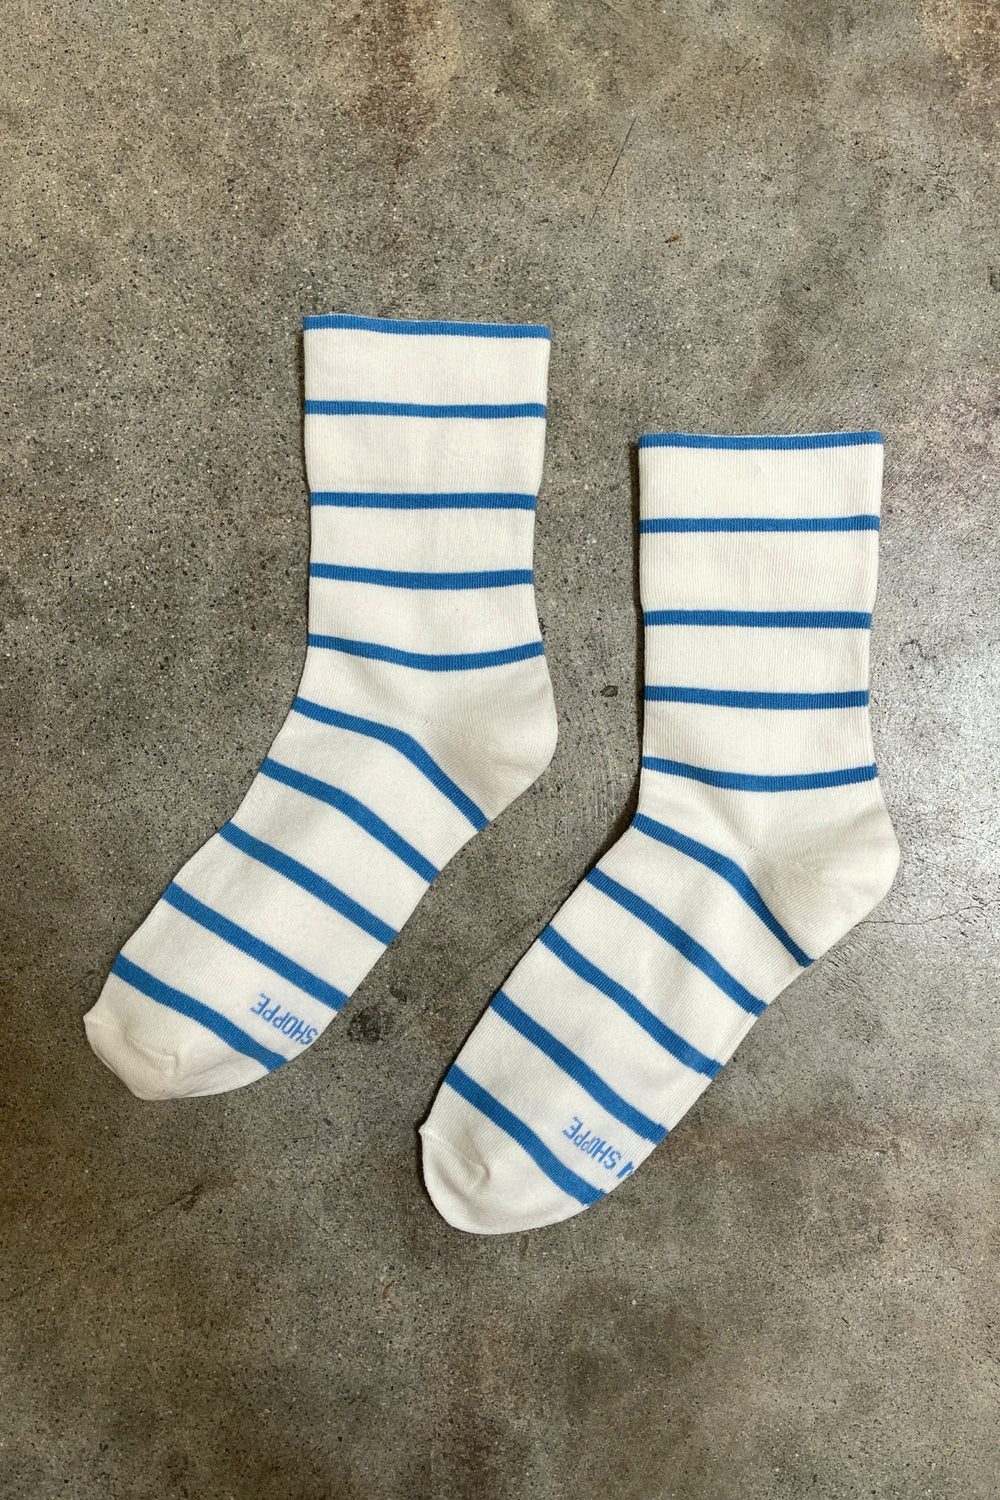 Ciel Blue Wally Socks